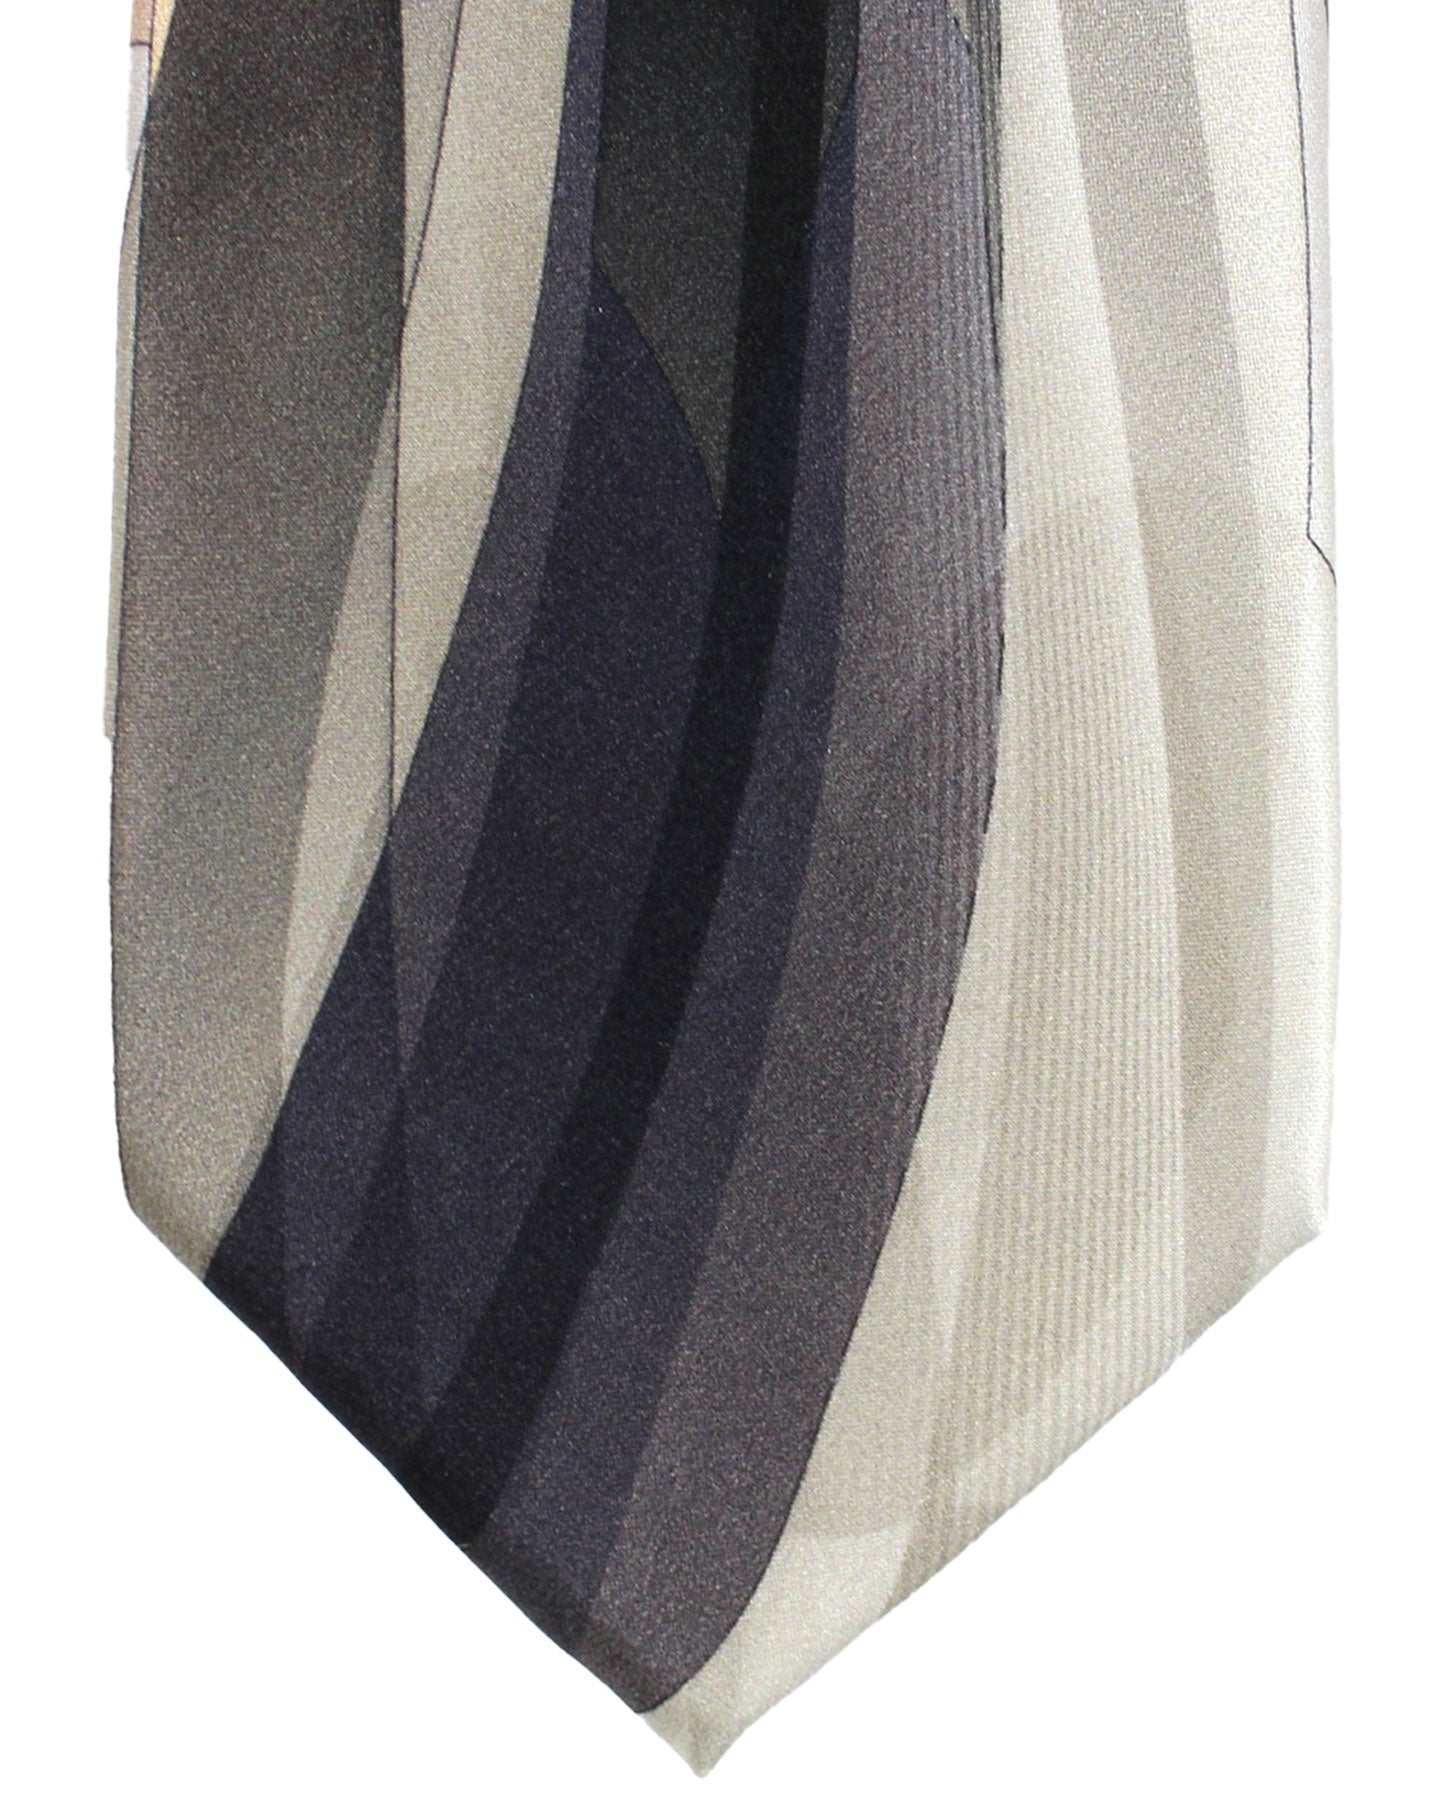 Vitaliano Pancaldi Silk Tie Gray Black Taupe Swirl Design